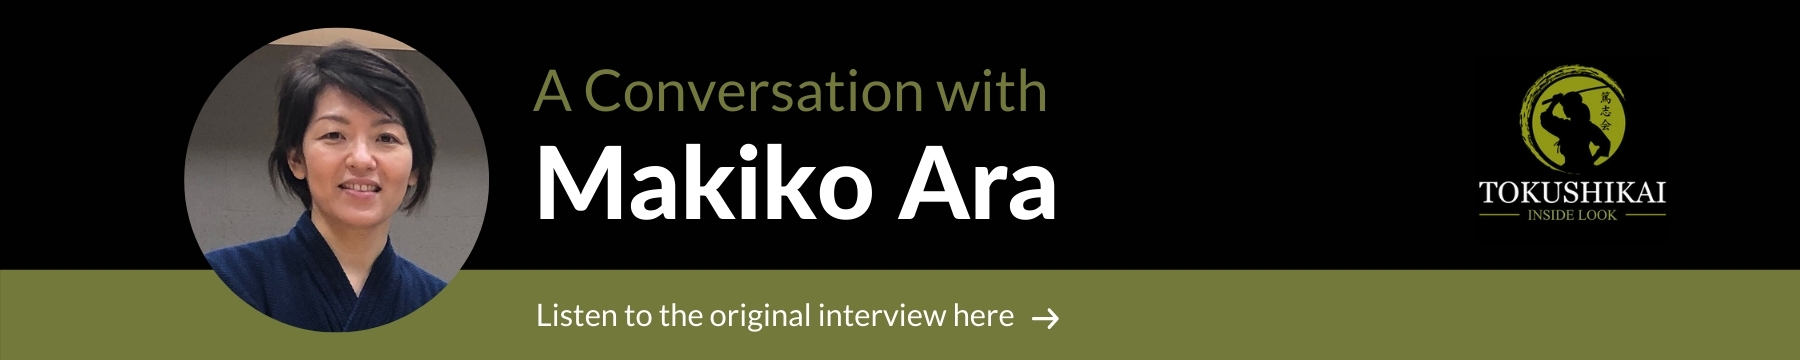 A Conversation with Makiko Ara - Tokushikai Podcast